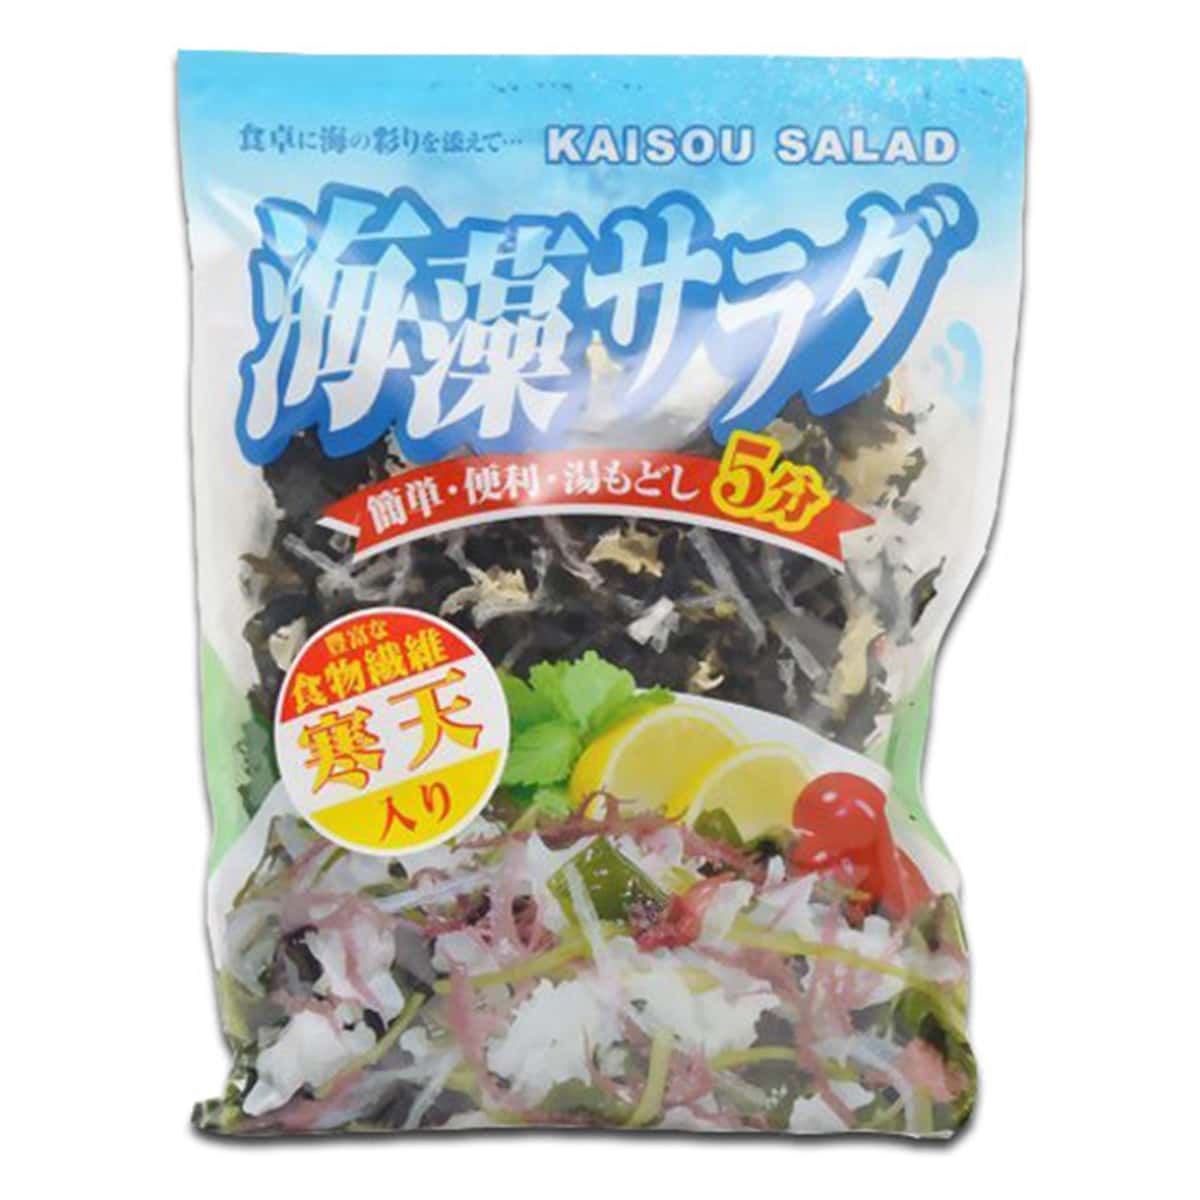 Buy Sanko Dried Seaweed Salad (Kaiso Salad) - 75 gm